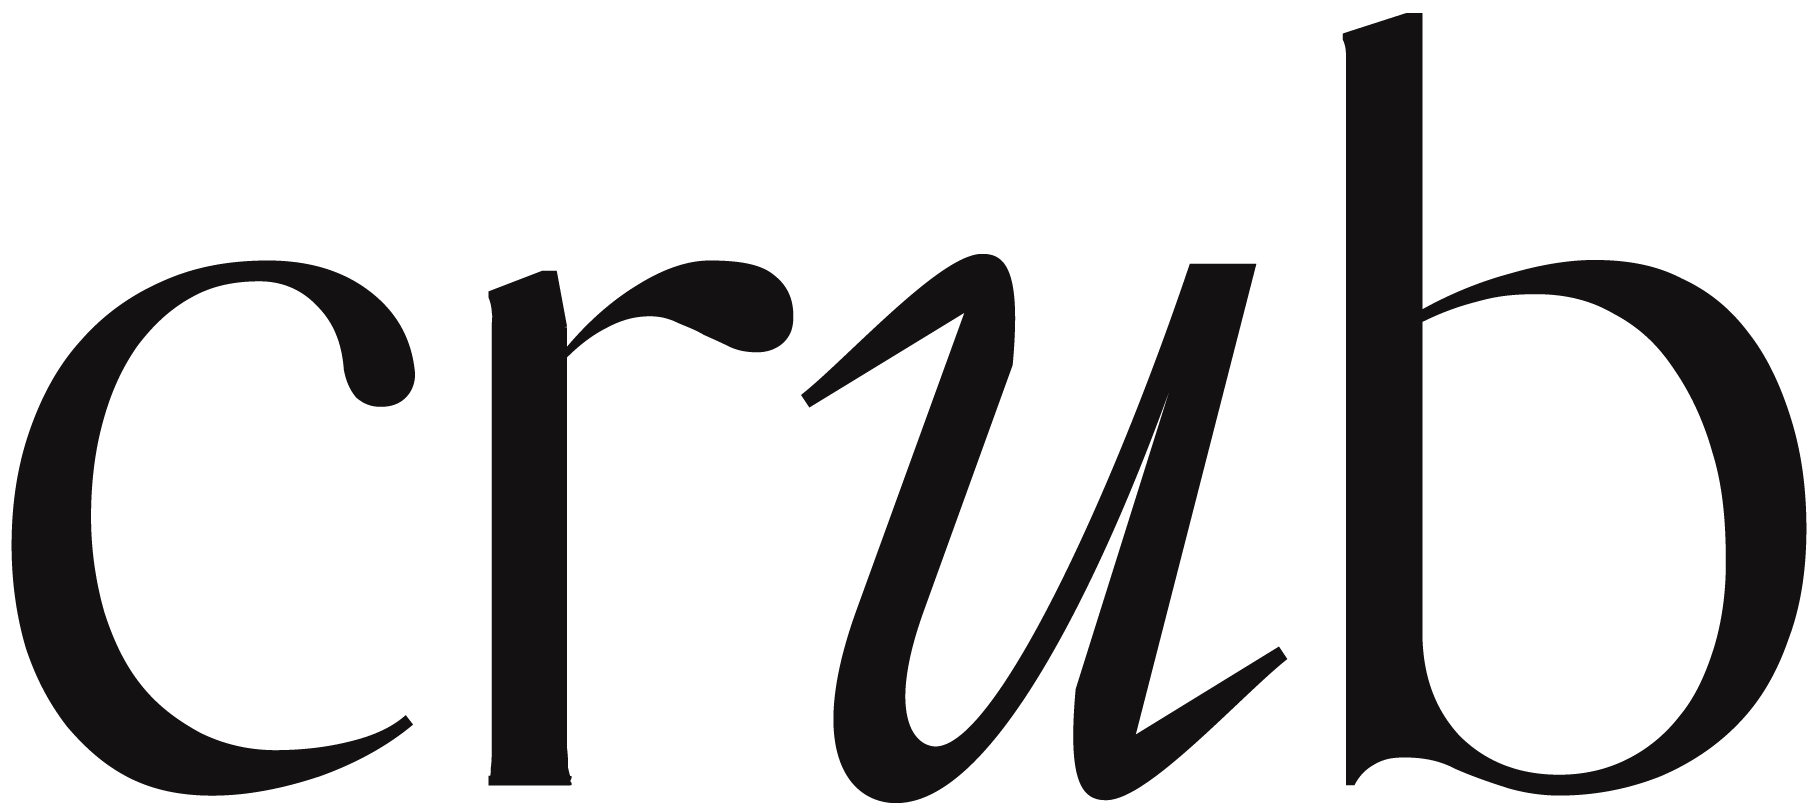 Crub Logo